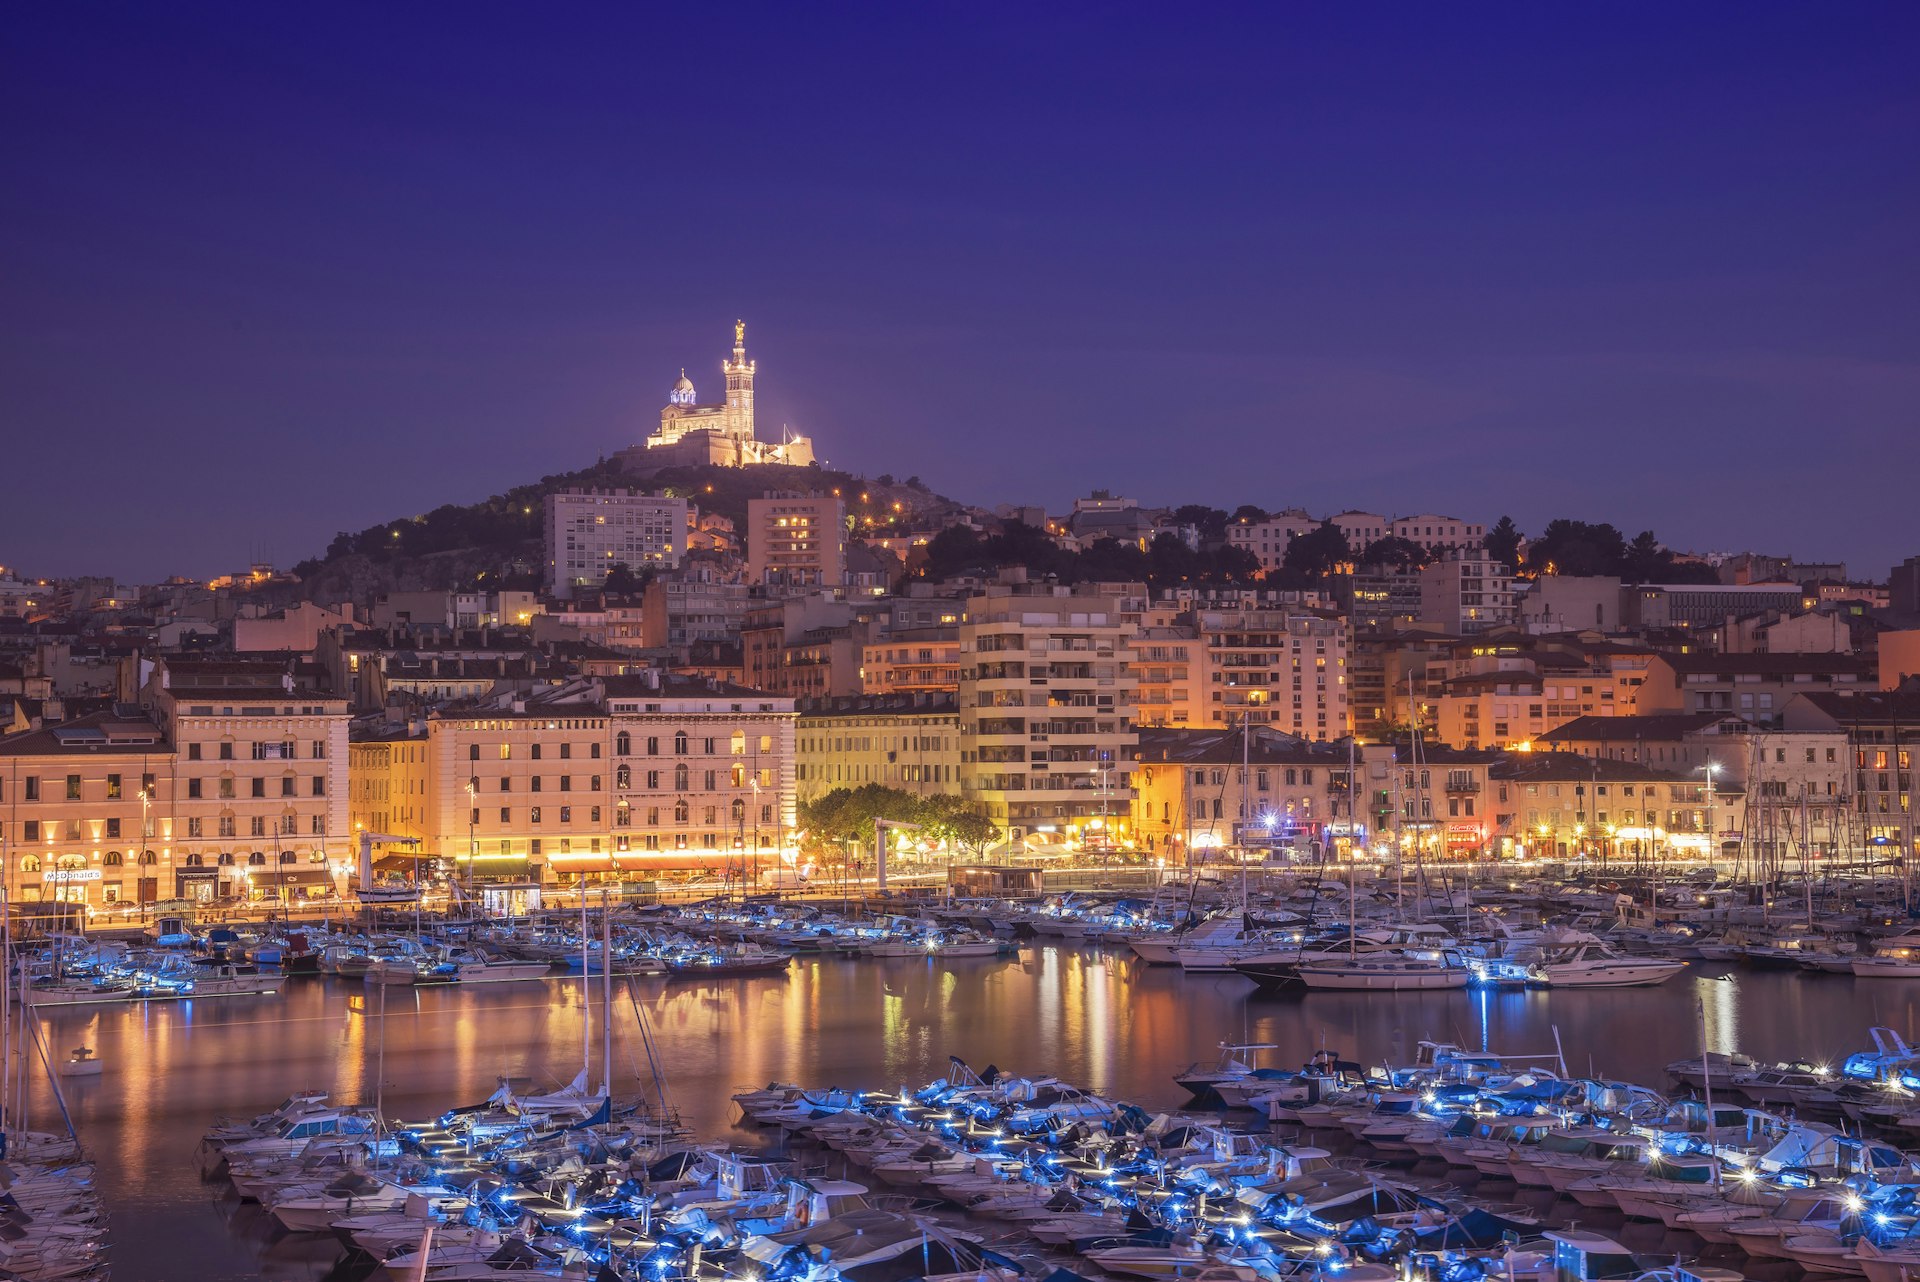 Vieux Port in Marseille lit up at night